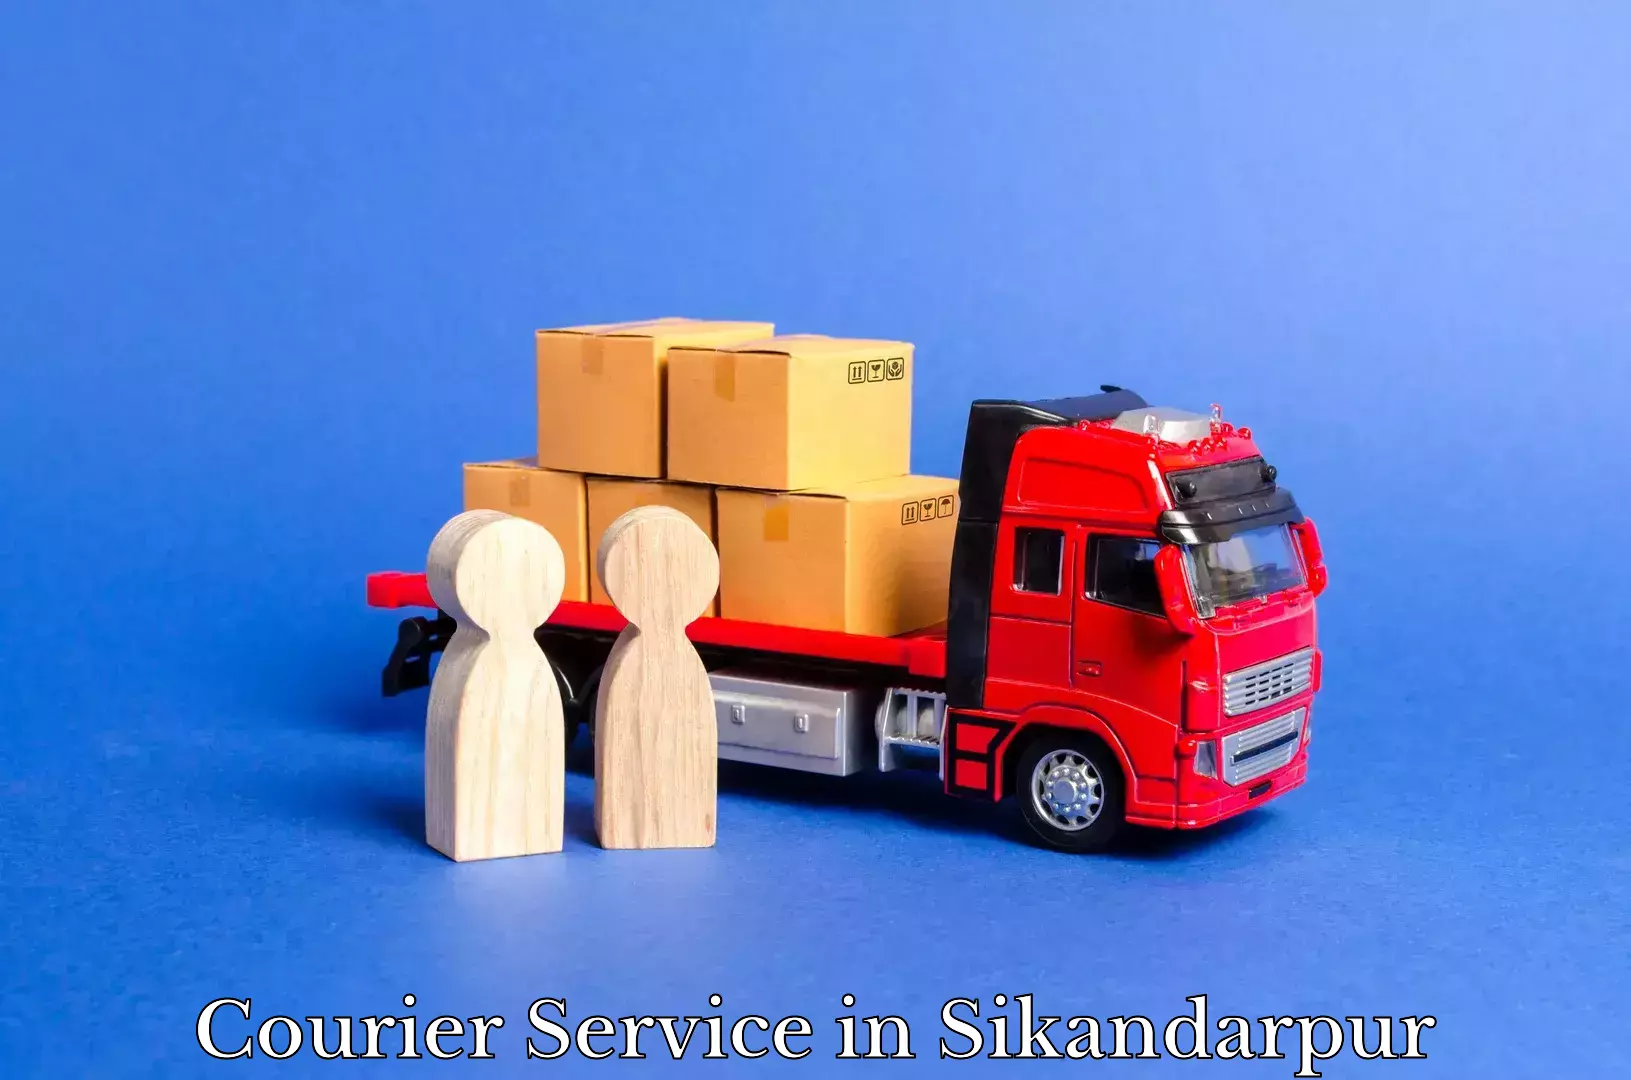 High-efficiency logistics in Sikandarpur